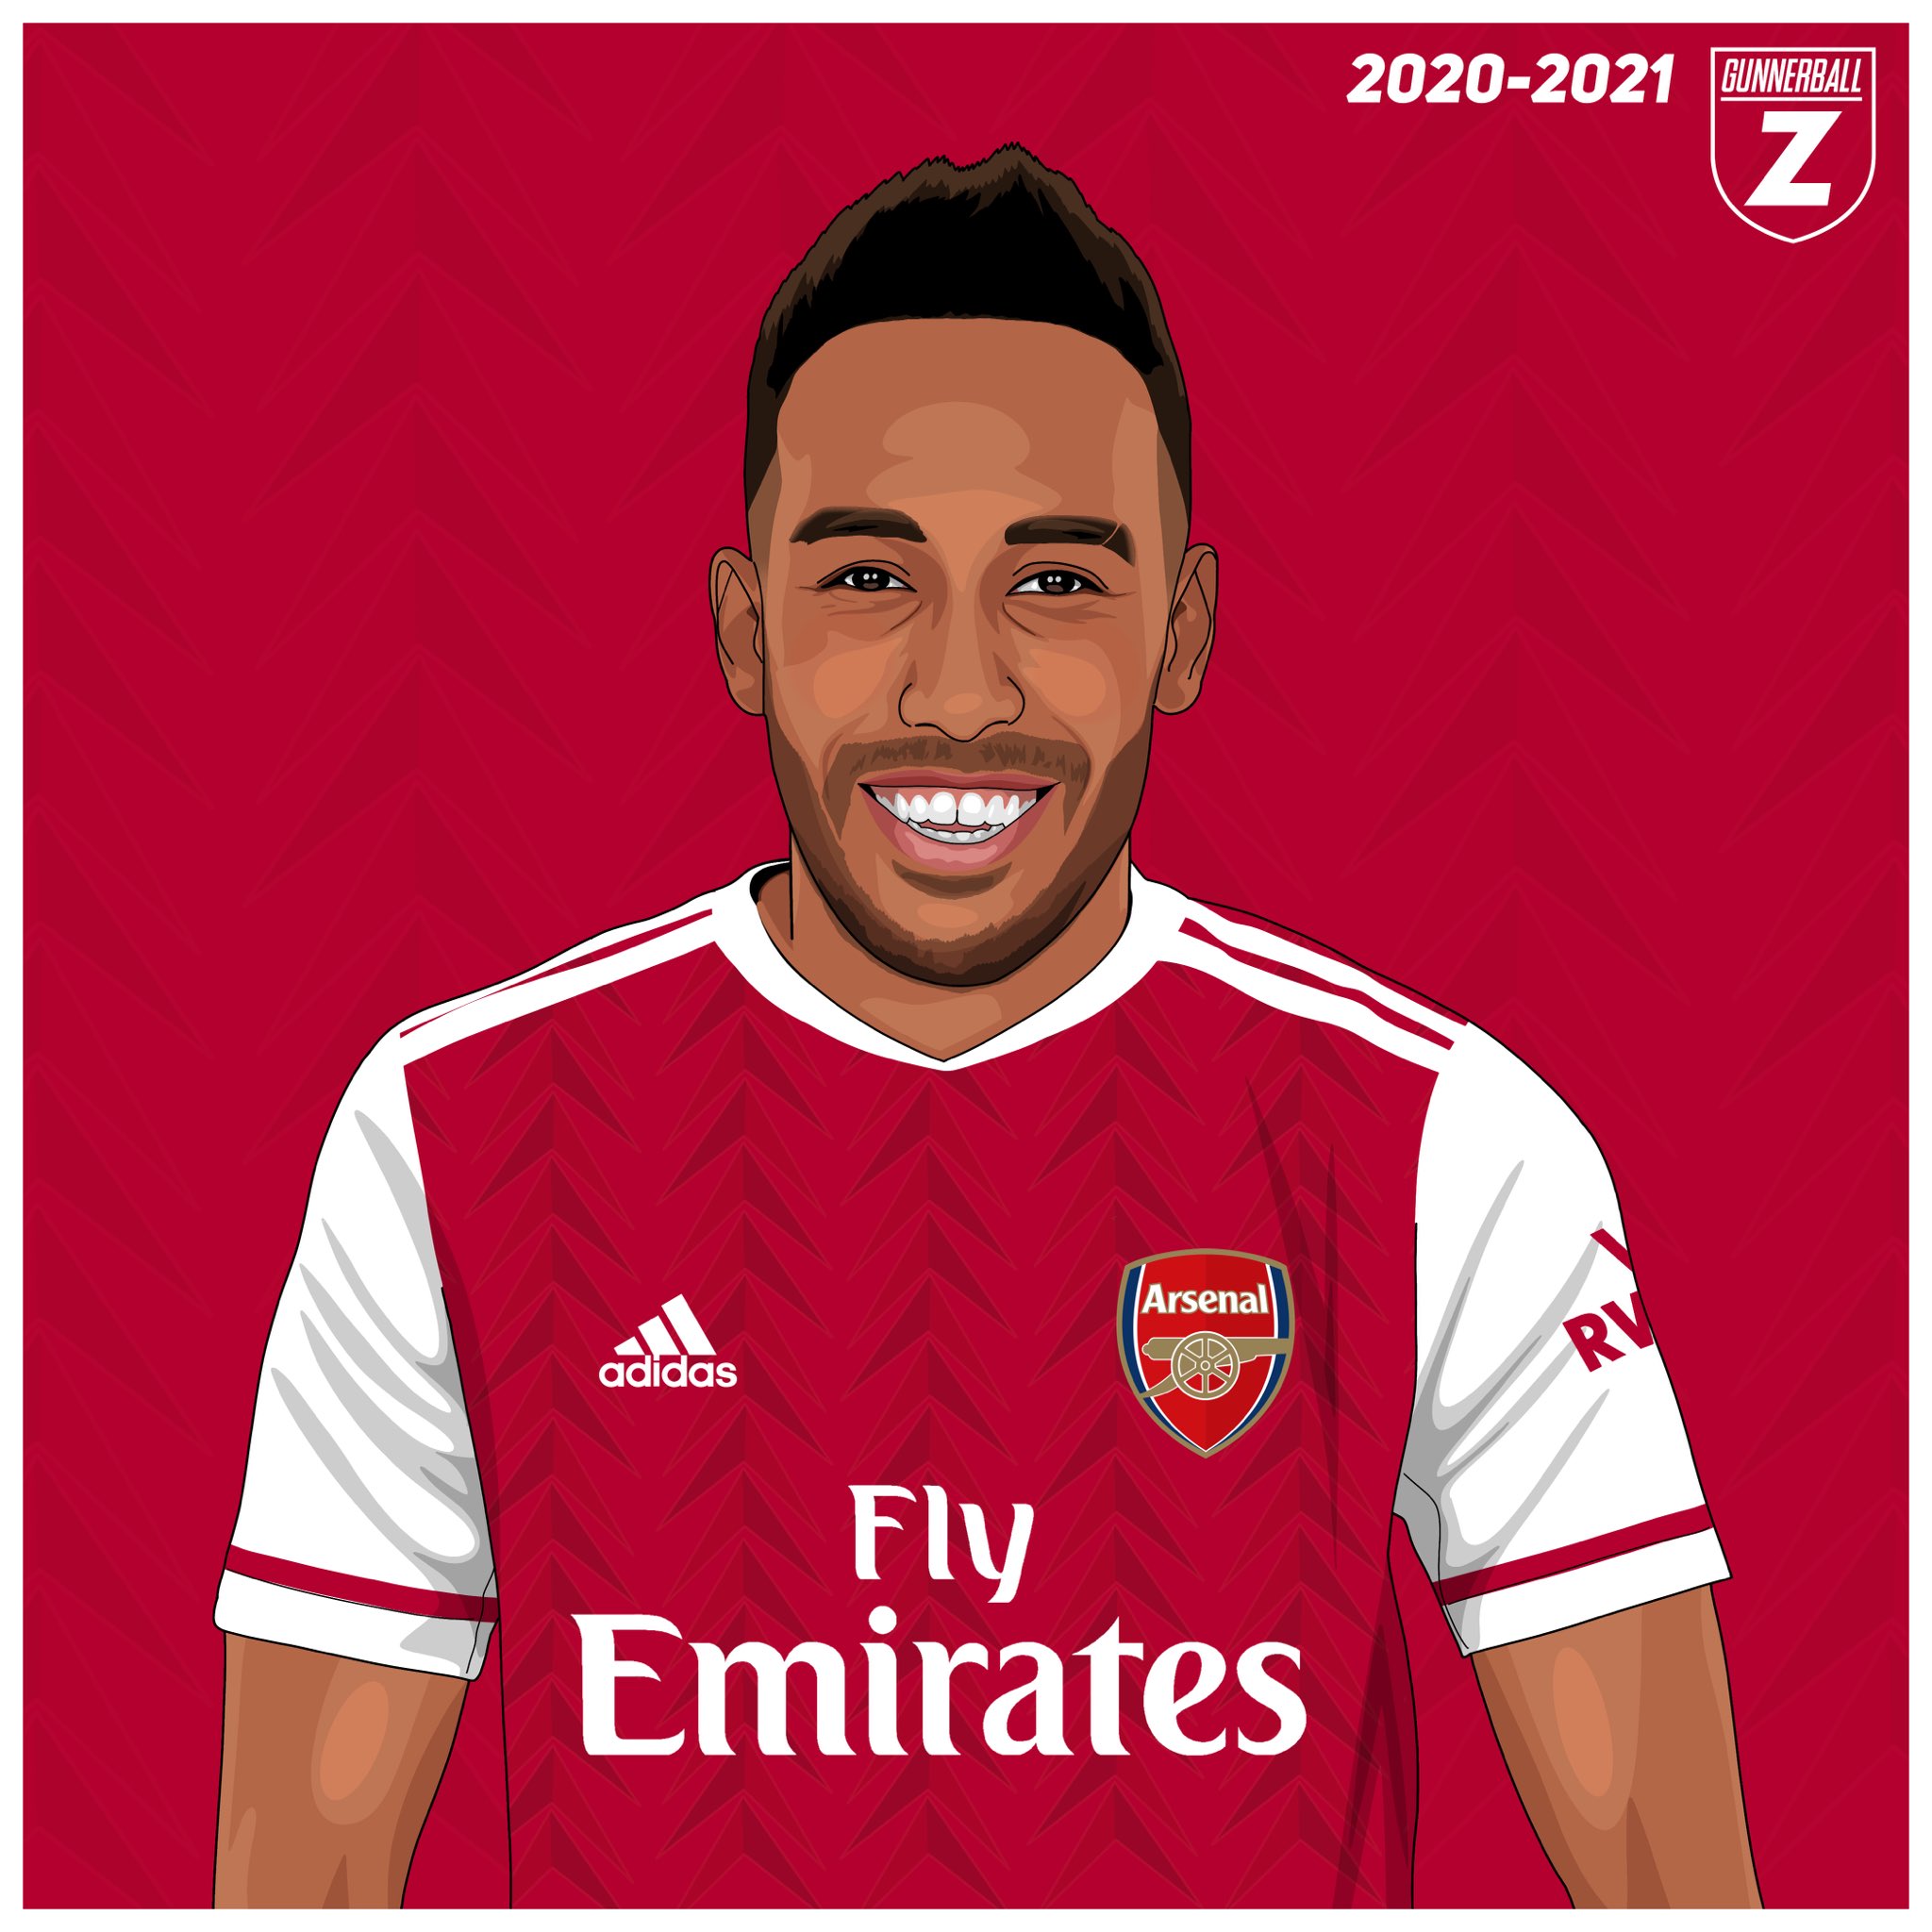 Arsenal Kits Leaked For The 2020 21 Season Temitope Jiboye